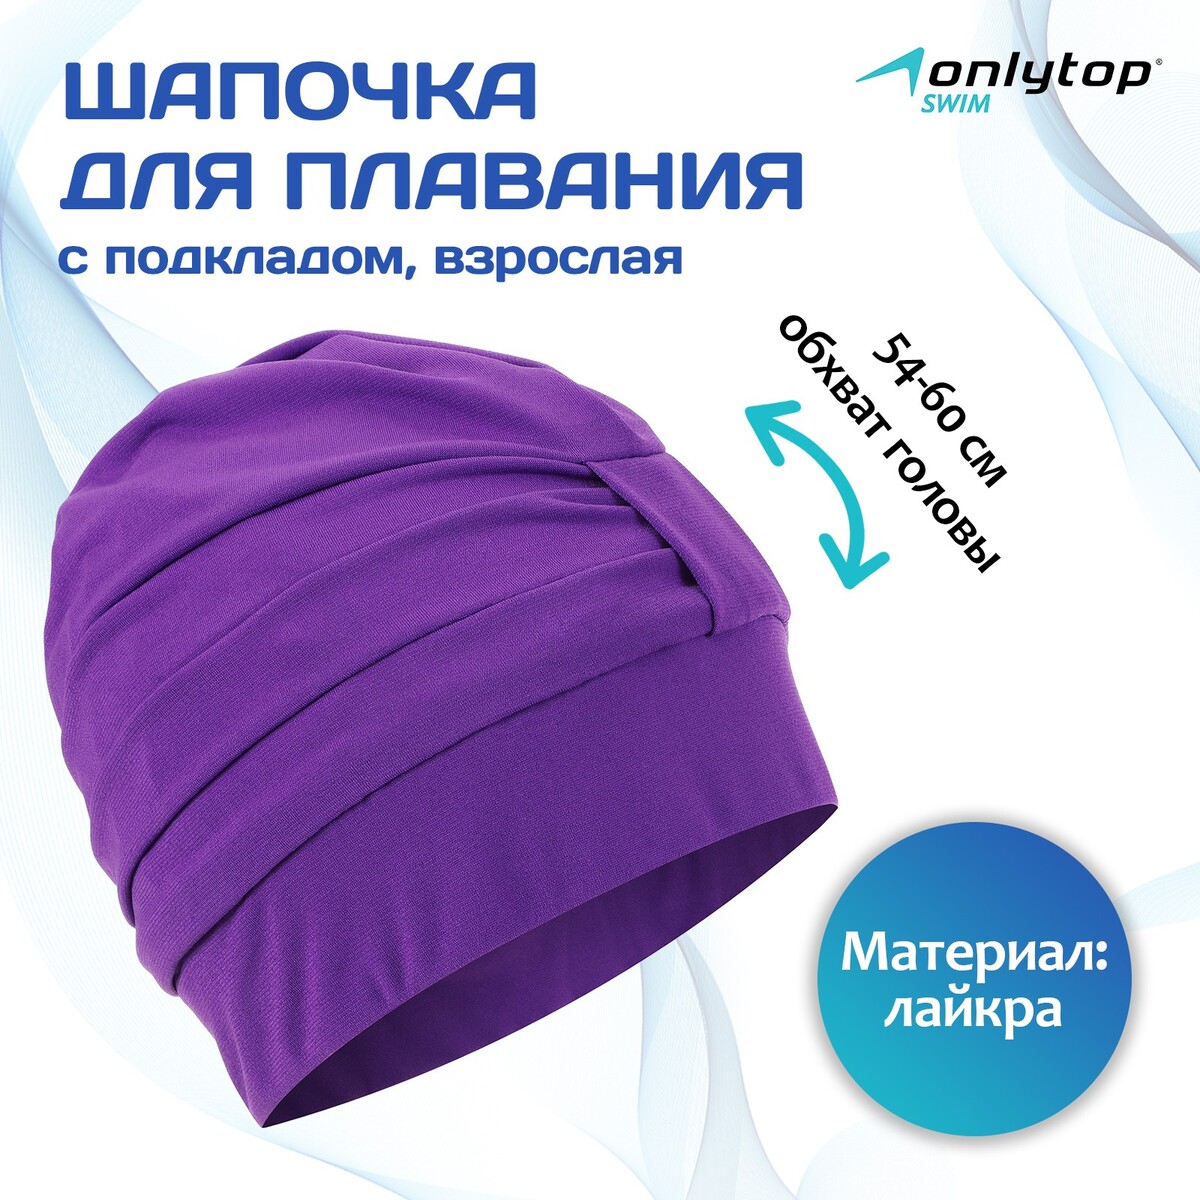 Шапочка для плавания взрослая onlytop, тканевая, обхват 54-60 см, цвет фиолетовый